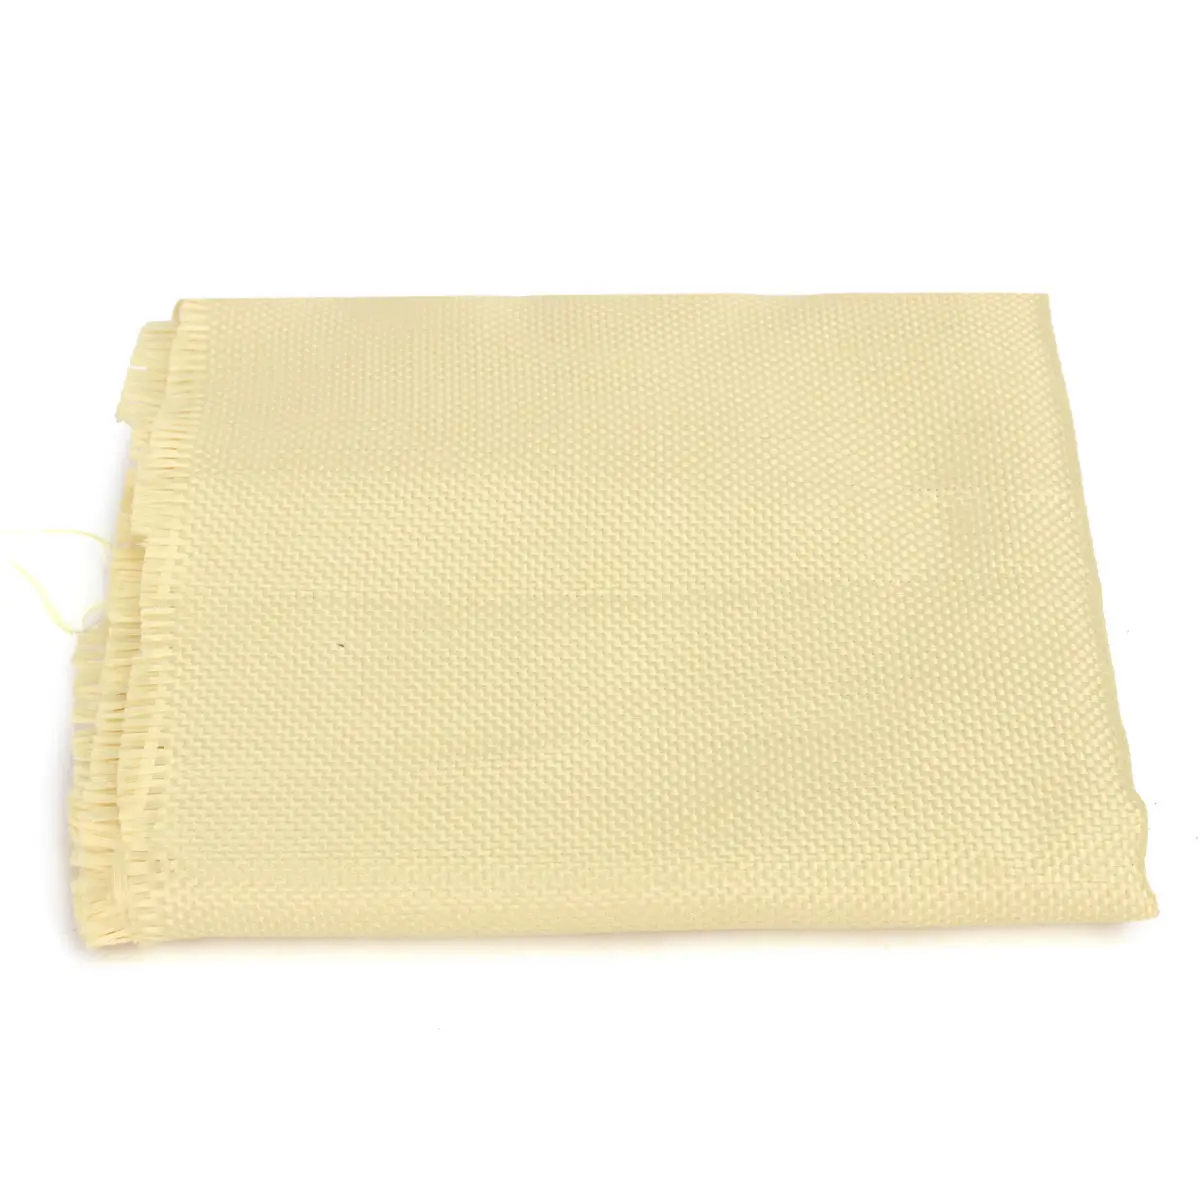 New 200gsm Woven Kevlar Fabric1100 Dtex Durable Plain Color Yellow Aramid Fiber Cloth Mayitr DIY Sewing Crafts 100cm*30cm